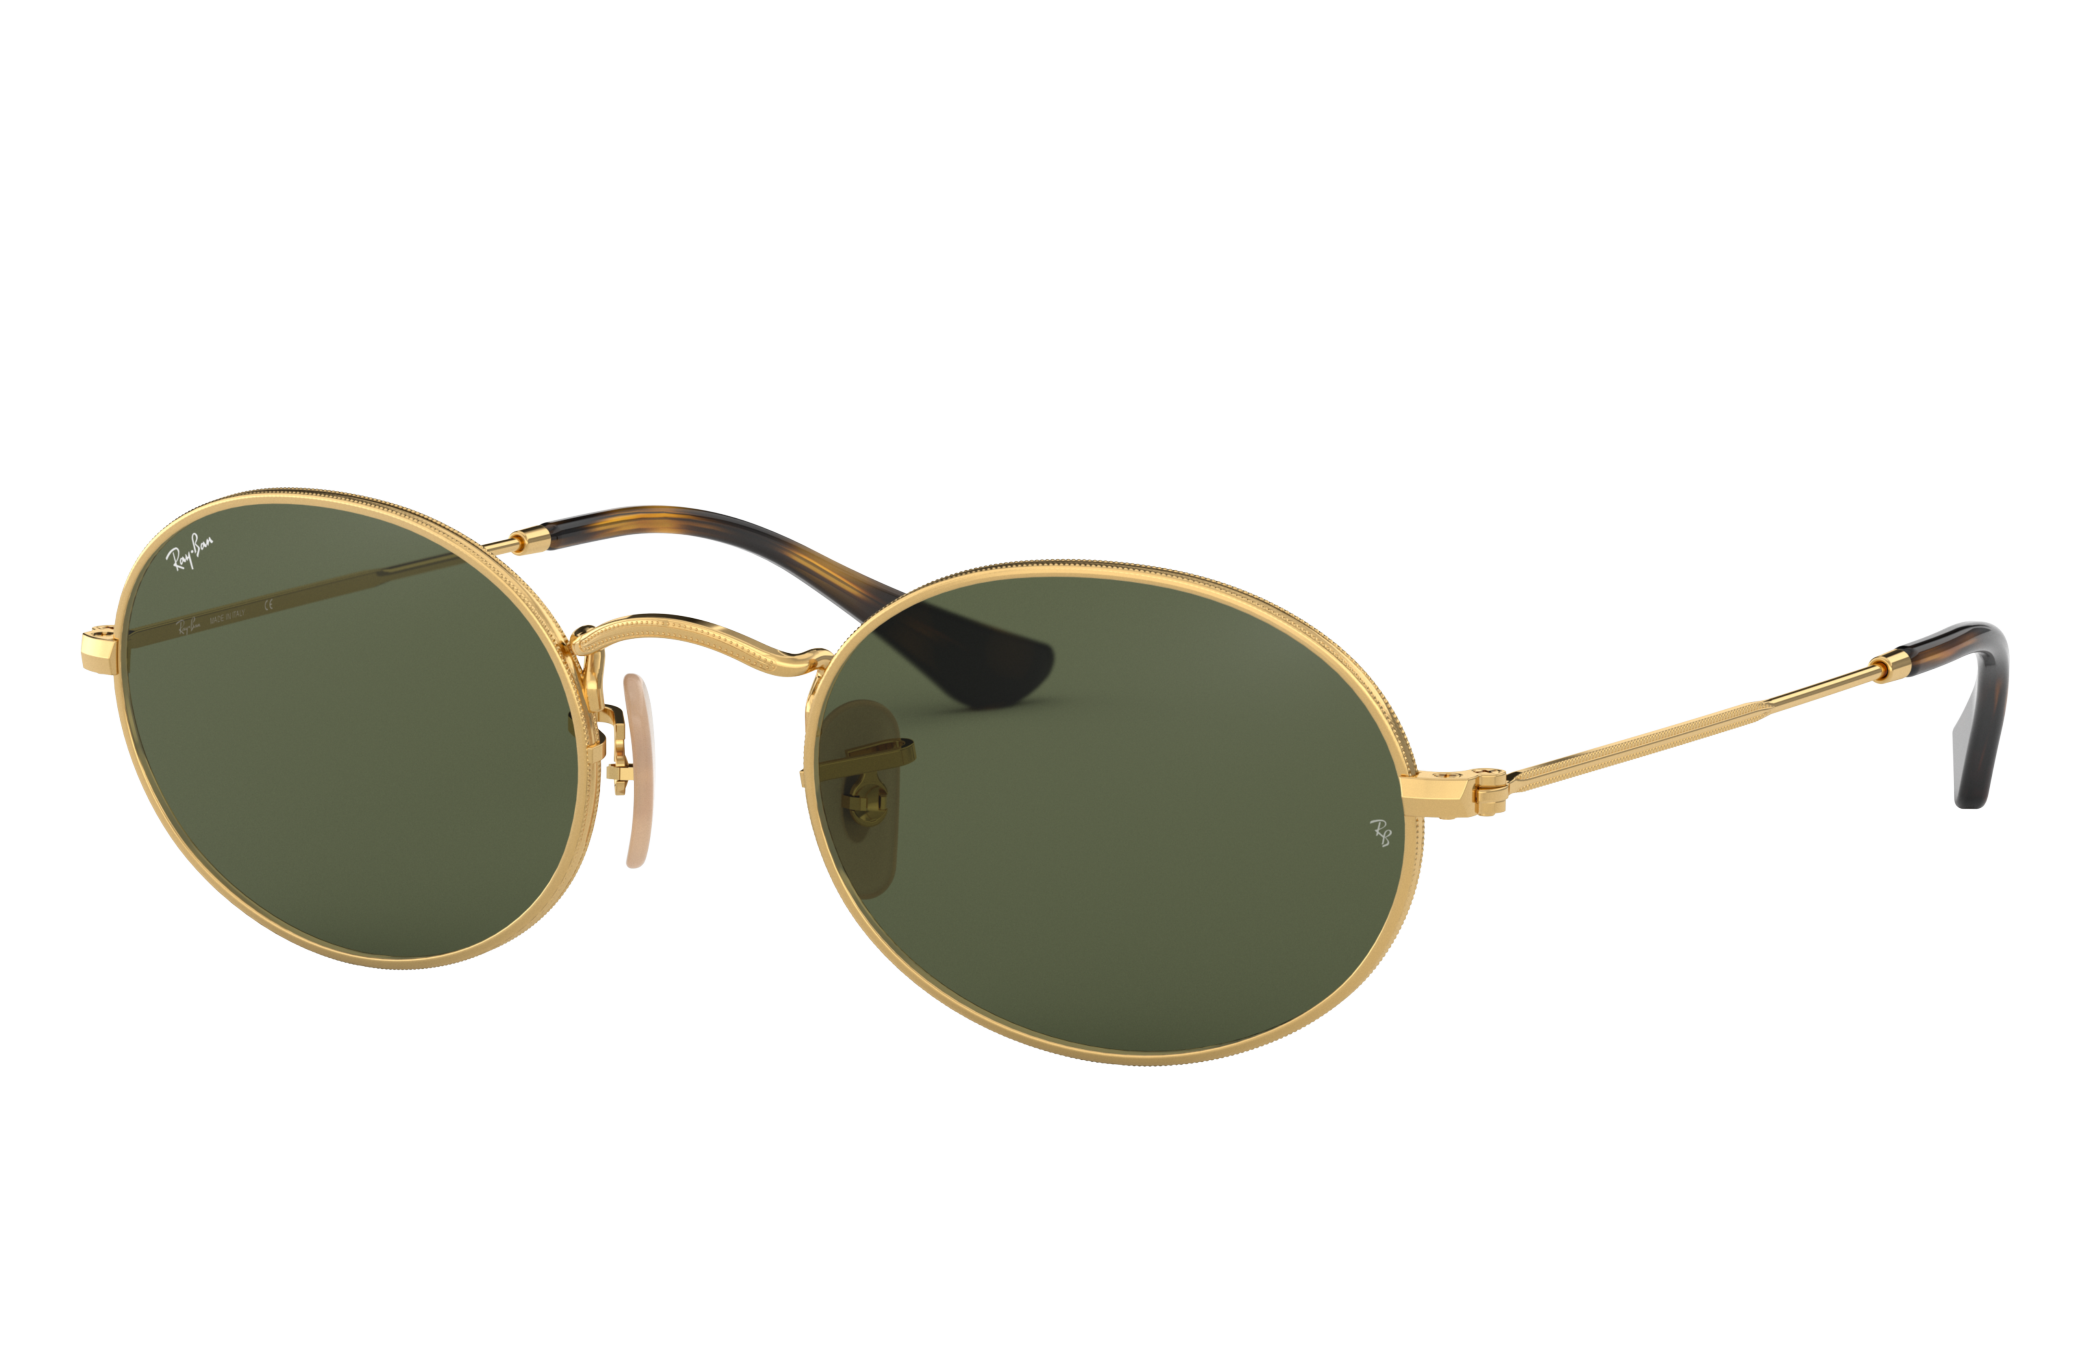 Accessoires Zonnebrillen Ovale zonnebrillen Rayban Ovale zonnebril zwart-goud casual uitstraling 